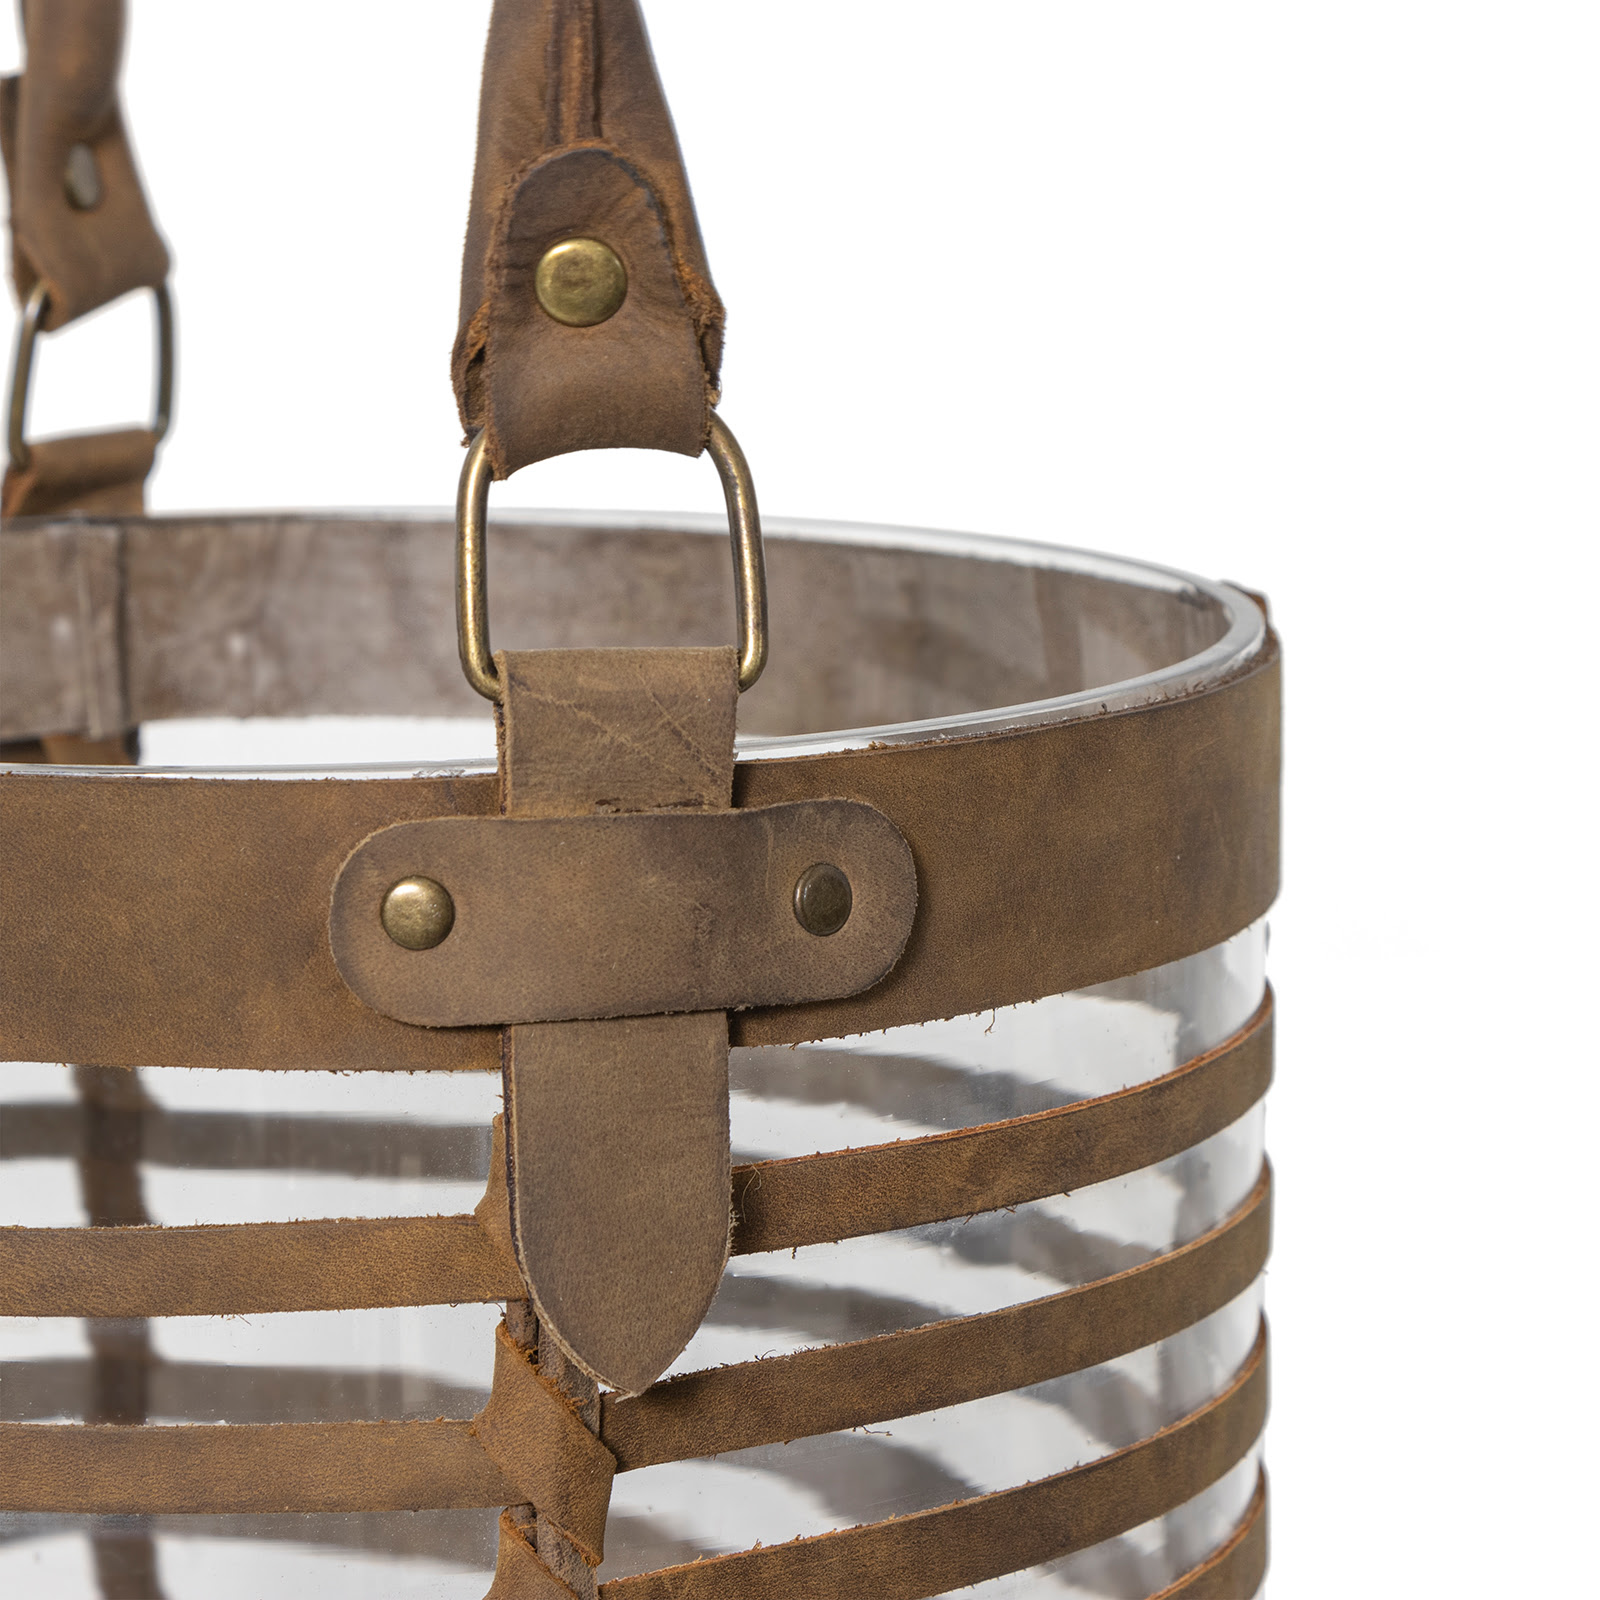 Regina Andrew Finn Leather Basket Small